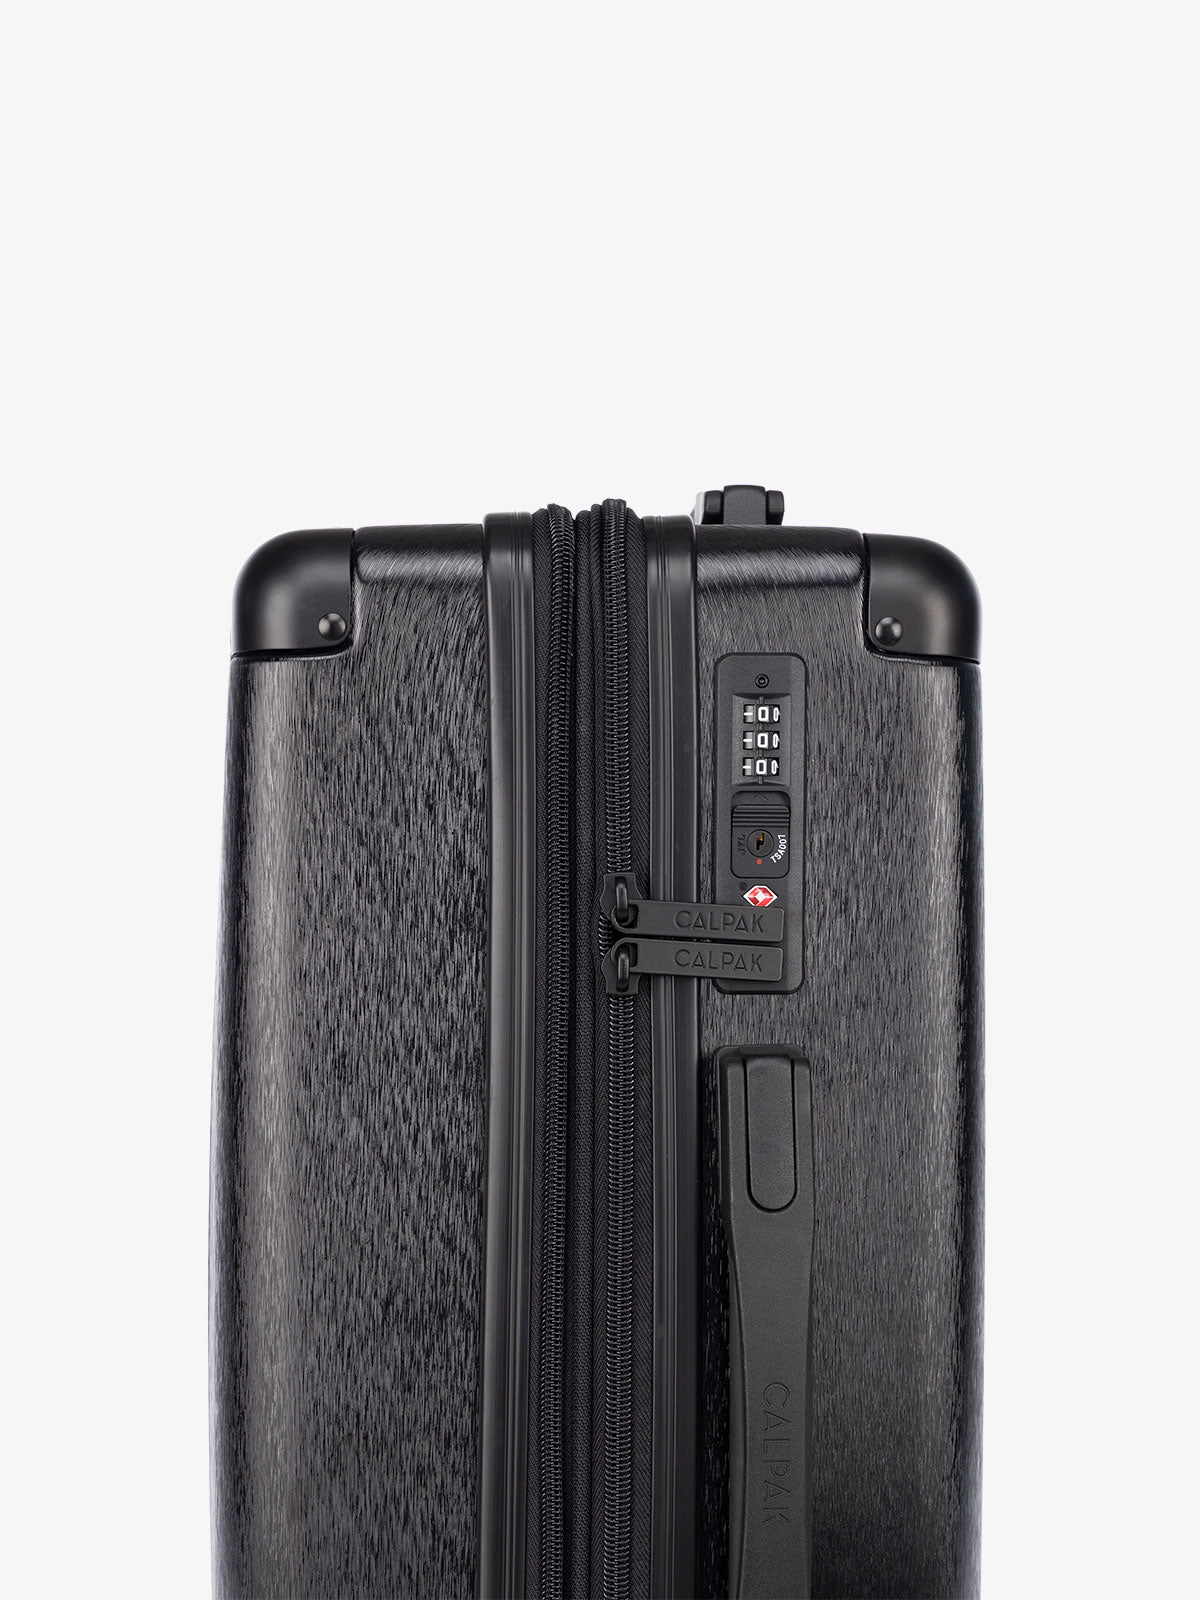 CALPAK Ambeur: lightweight hard side luggage with TSA approved lock